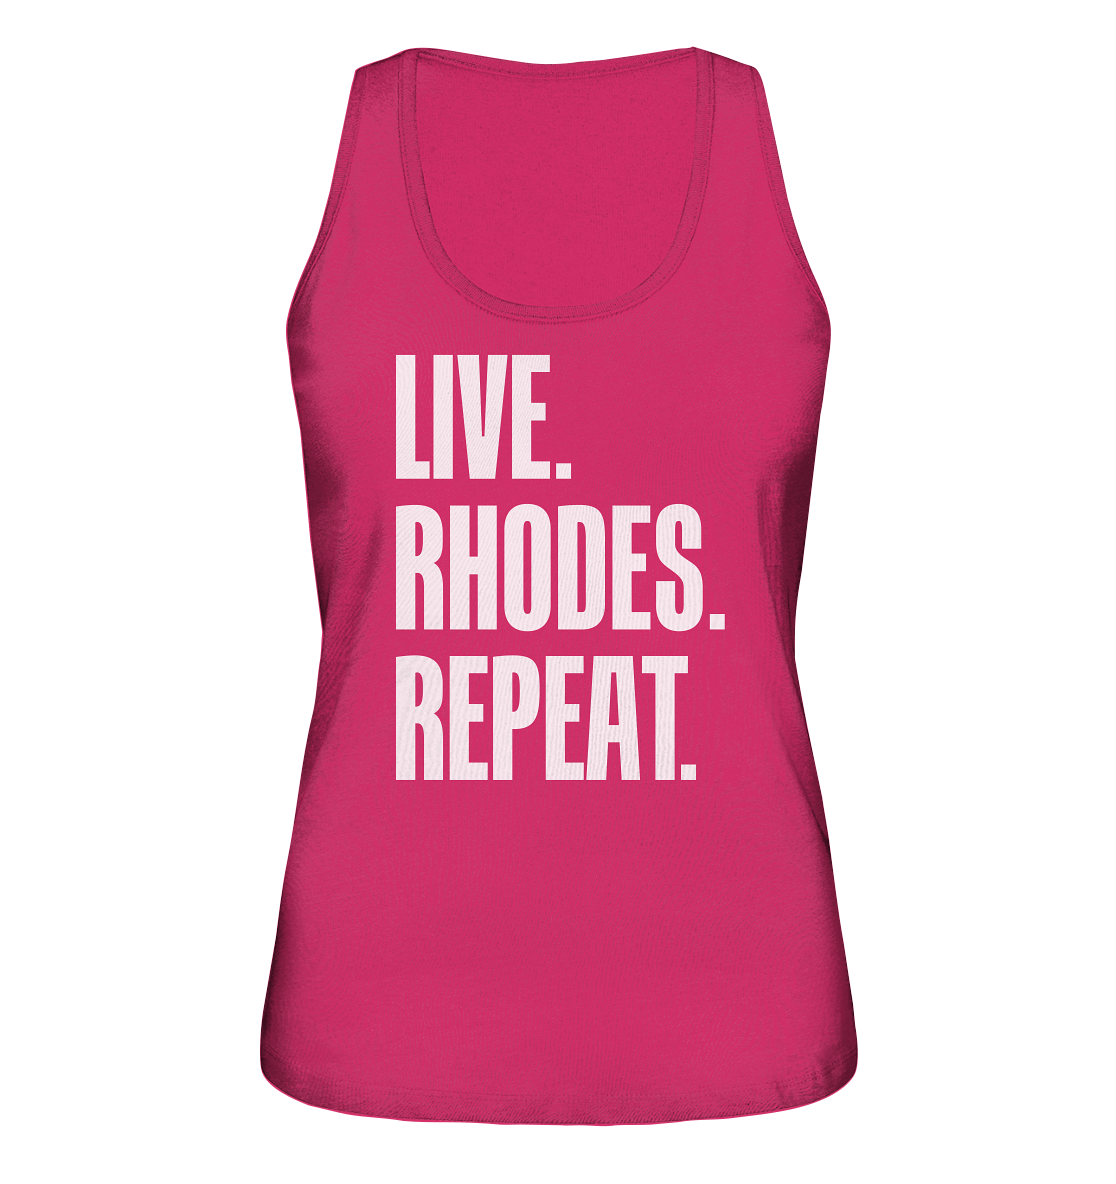 LIVE. RHODES. REPEAT. - Ladies Organic Tank-Top